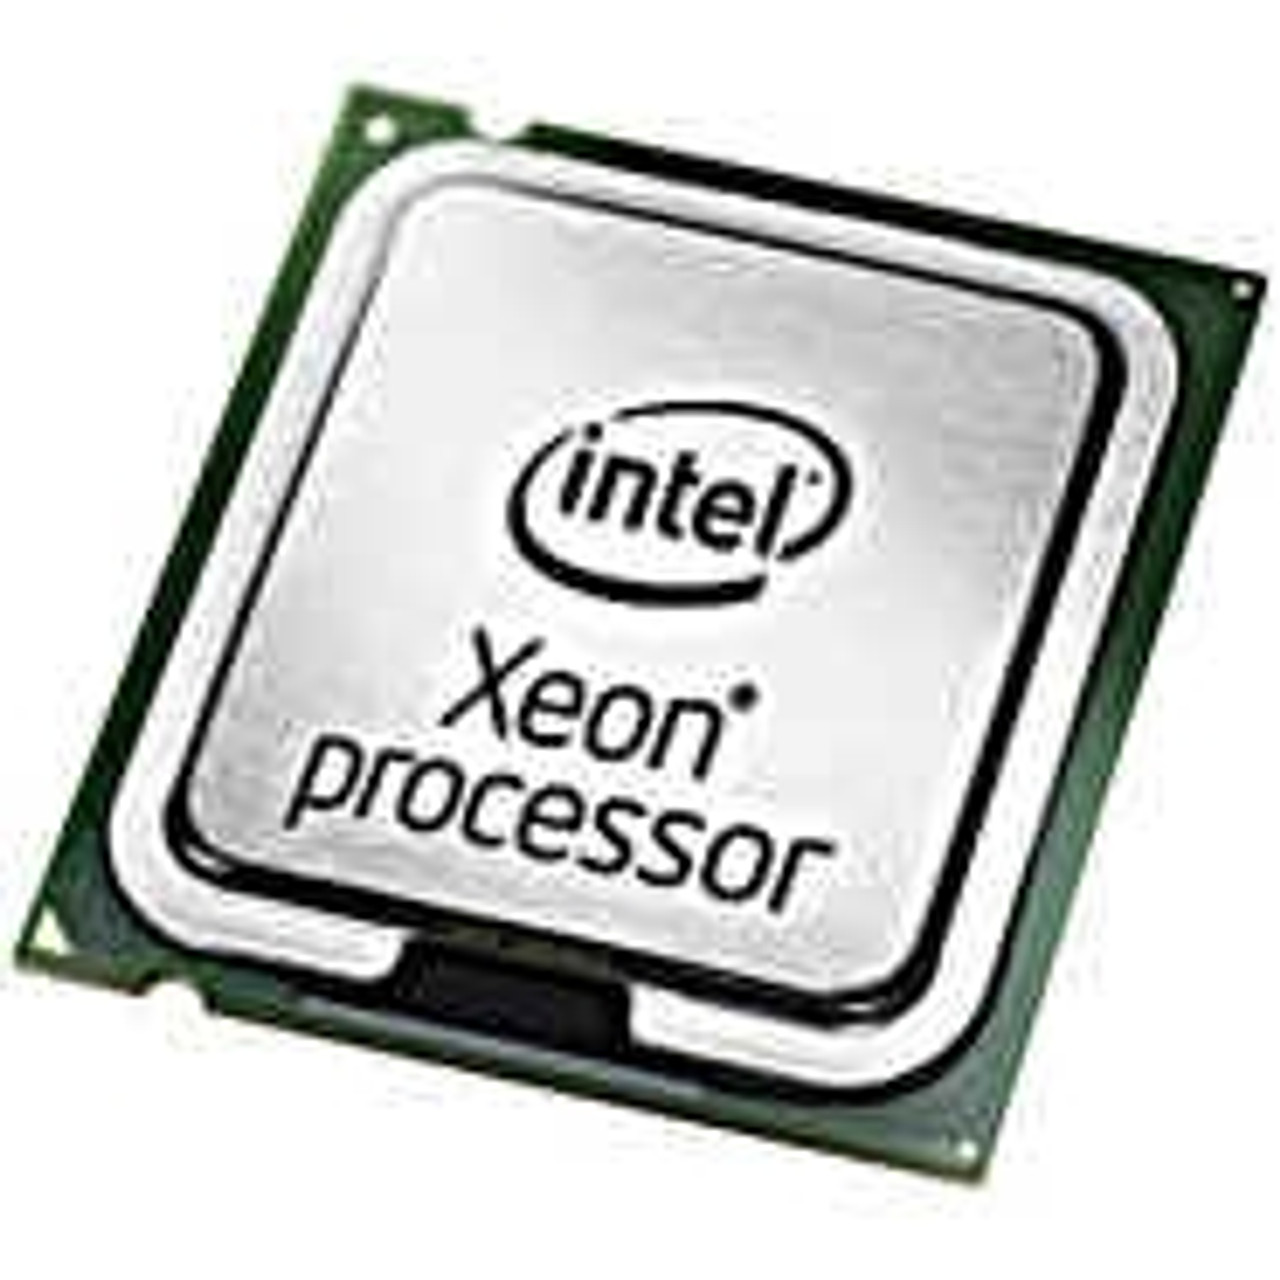 Intel Xeon 5000/5100 Dual-Core CPUs